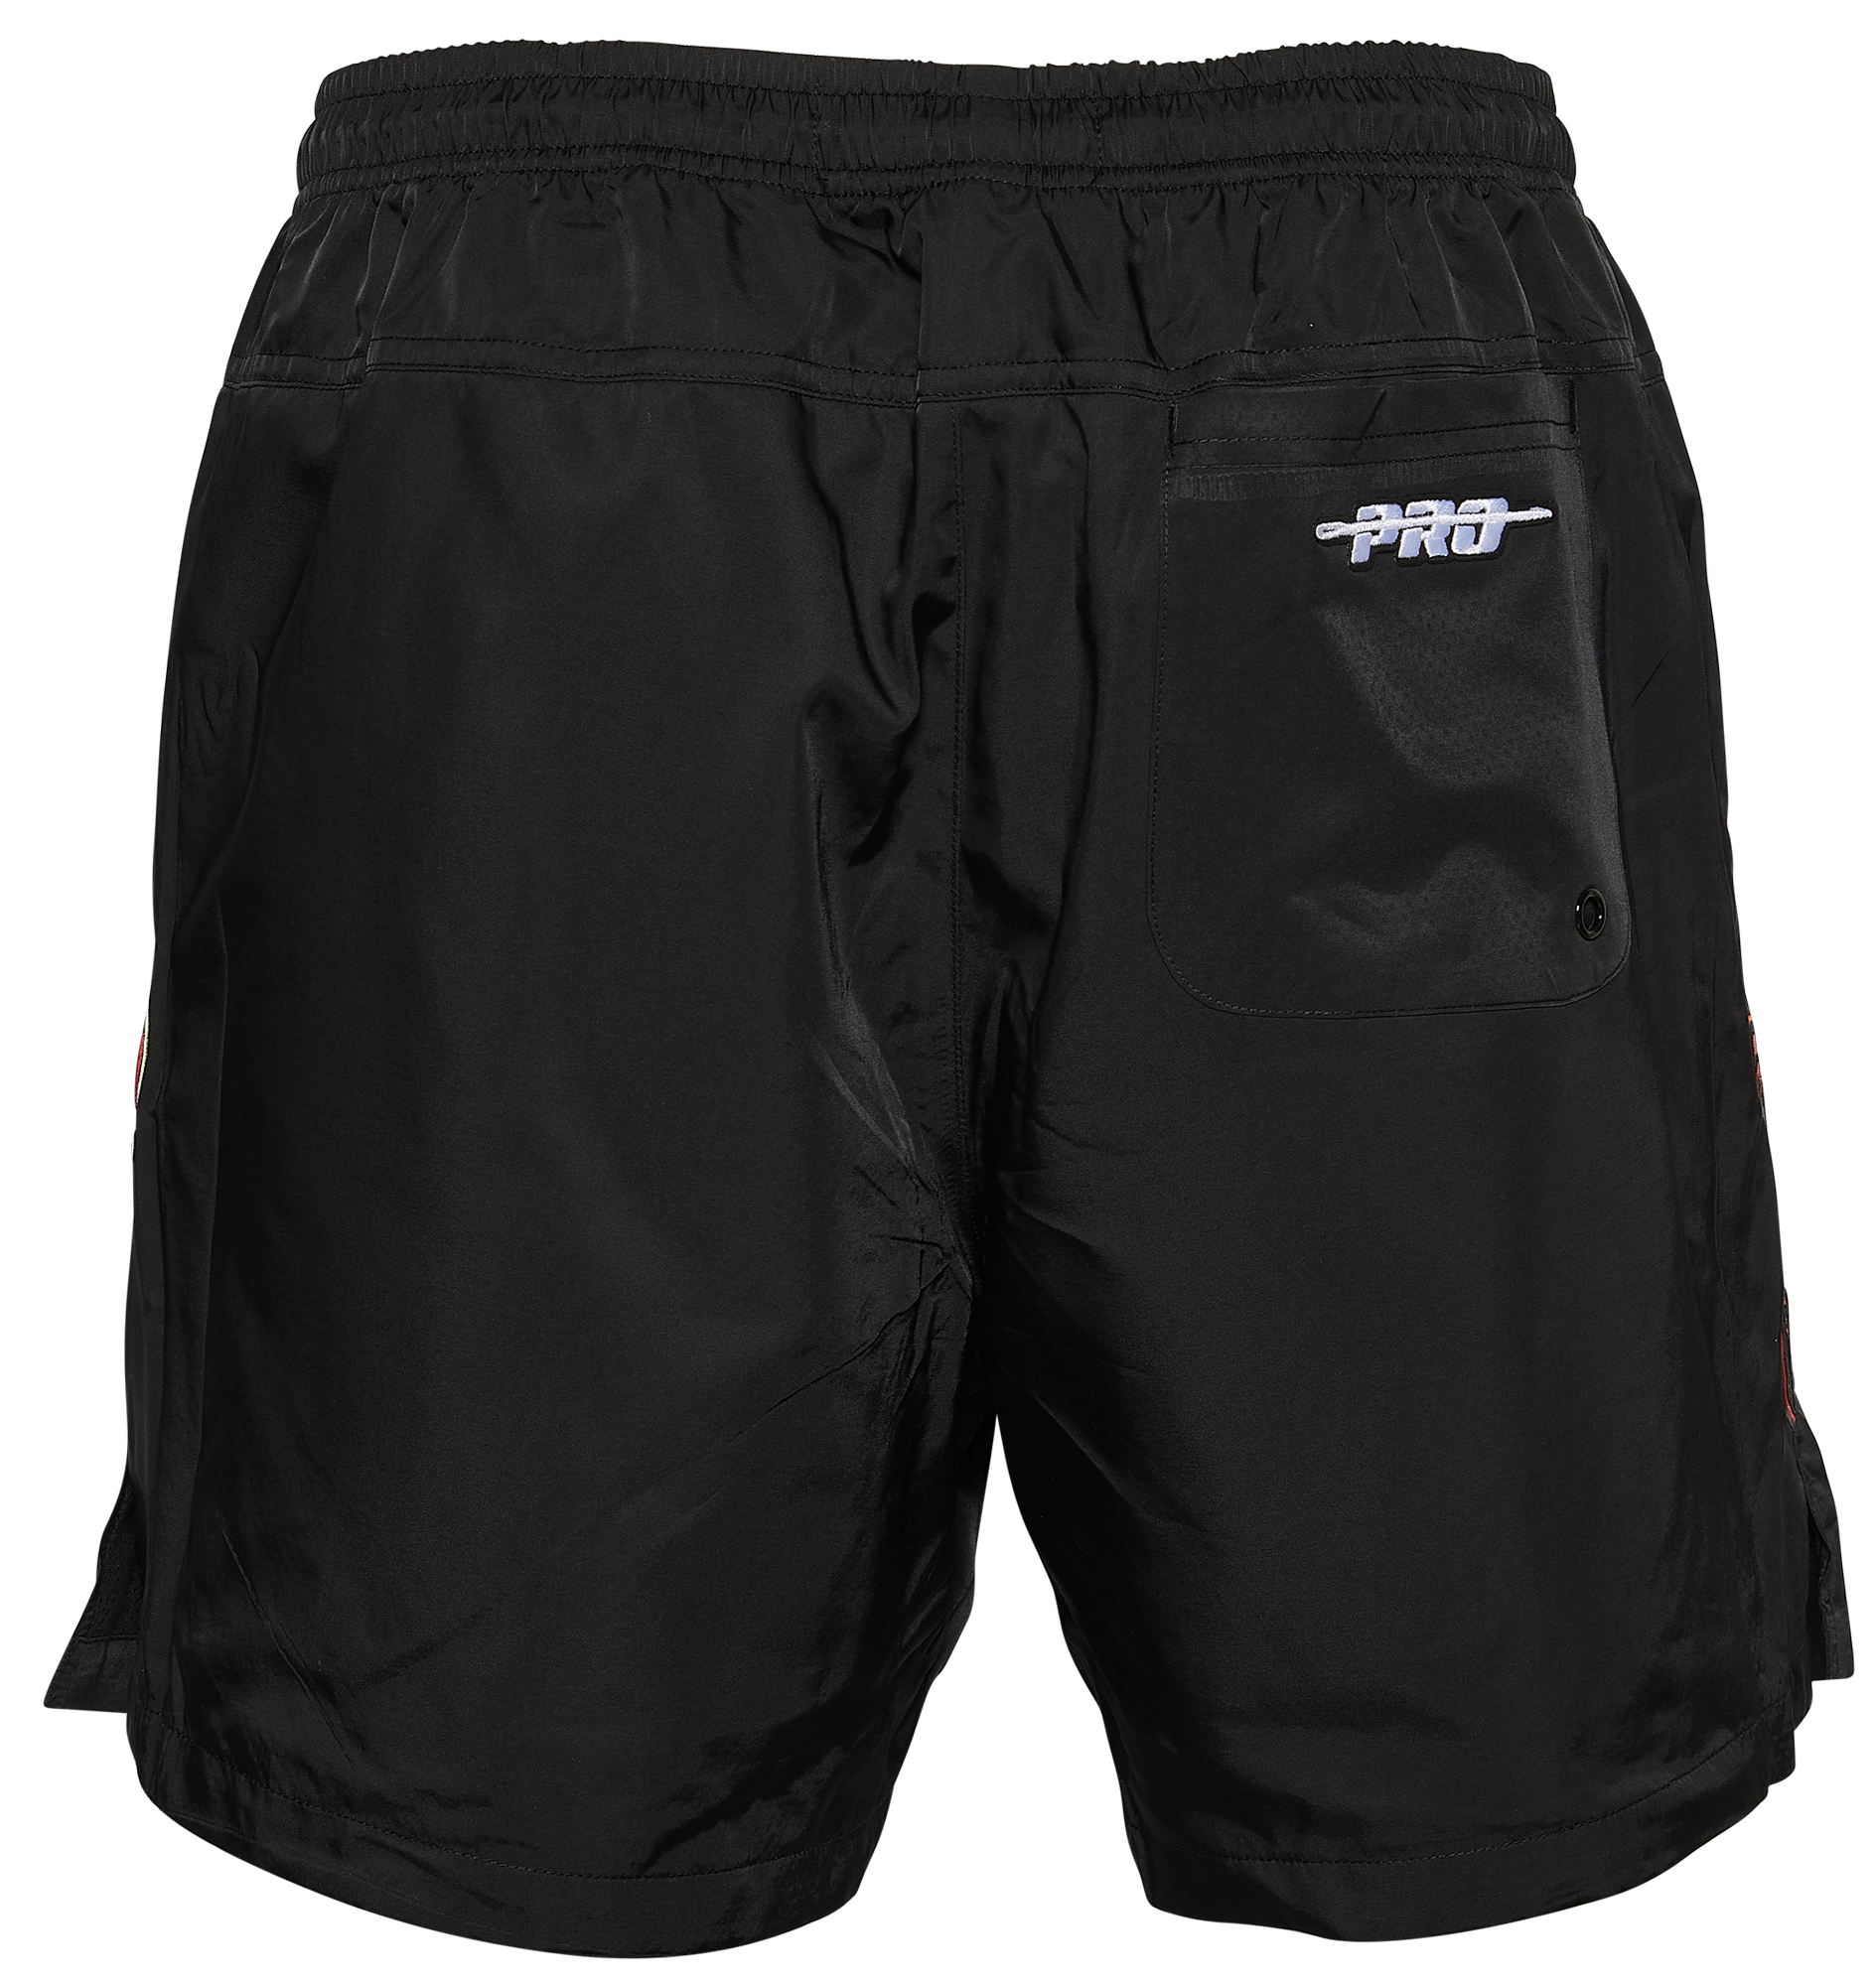 Pro Standard Bulls Infrared Shorts